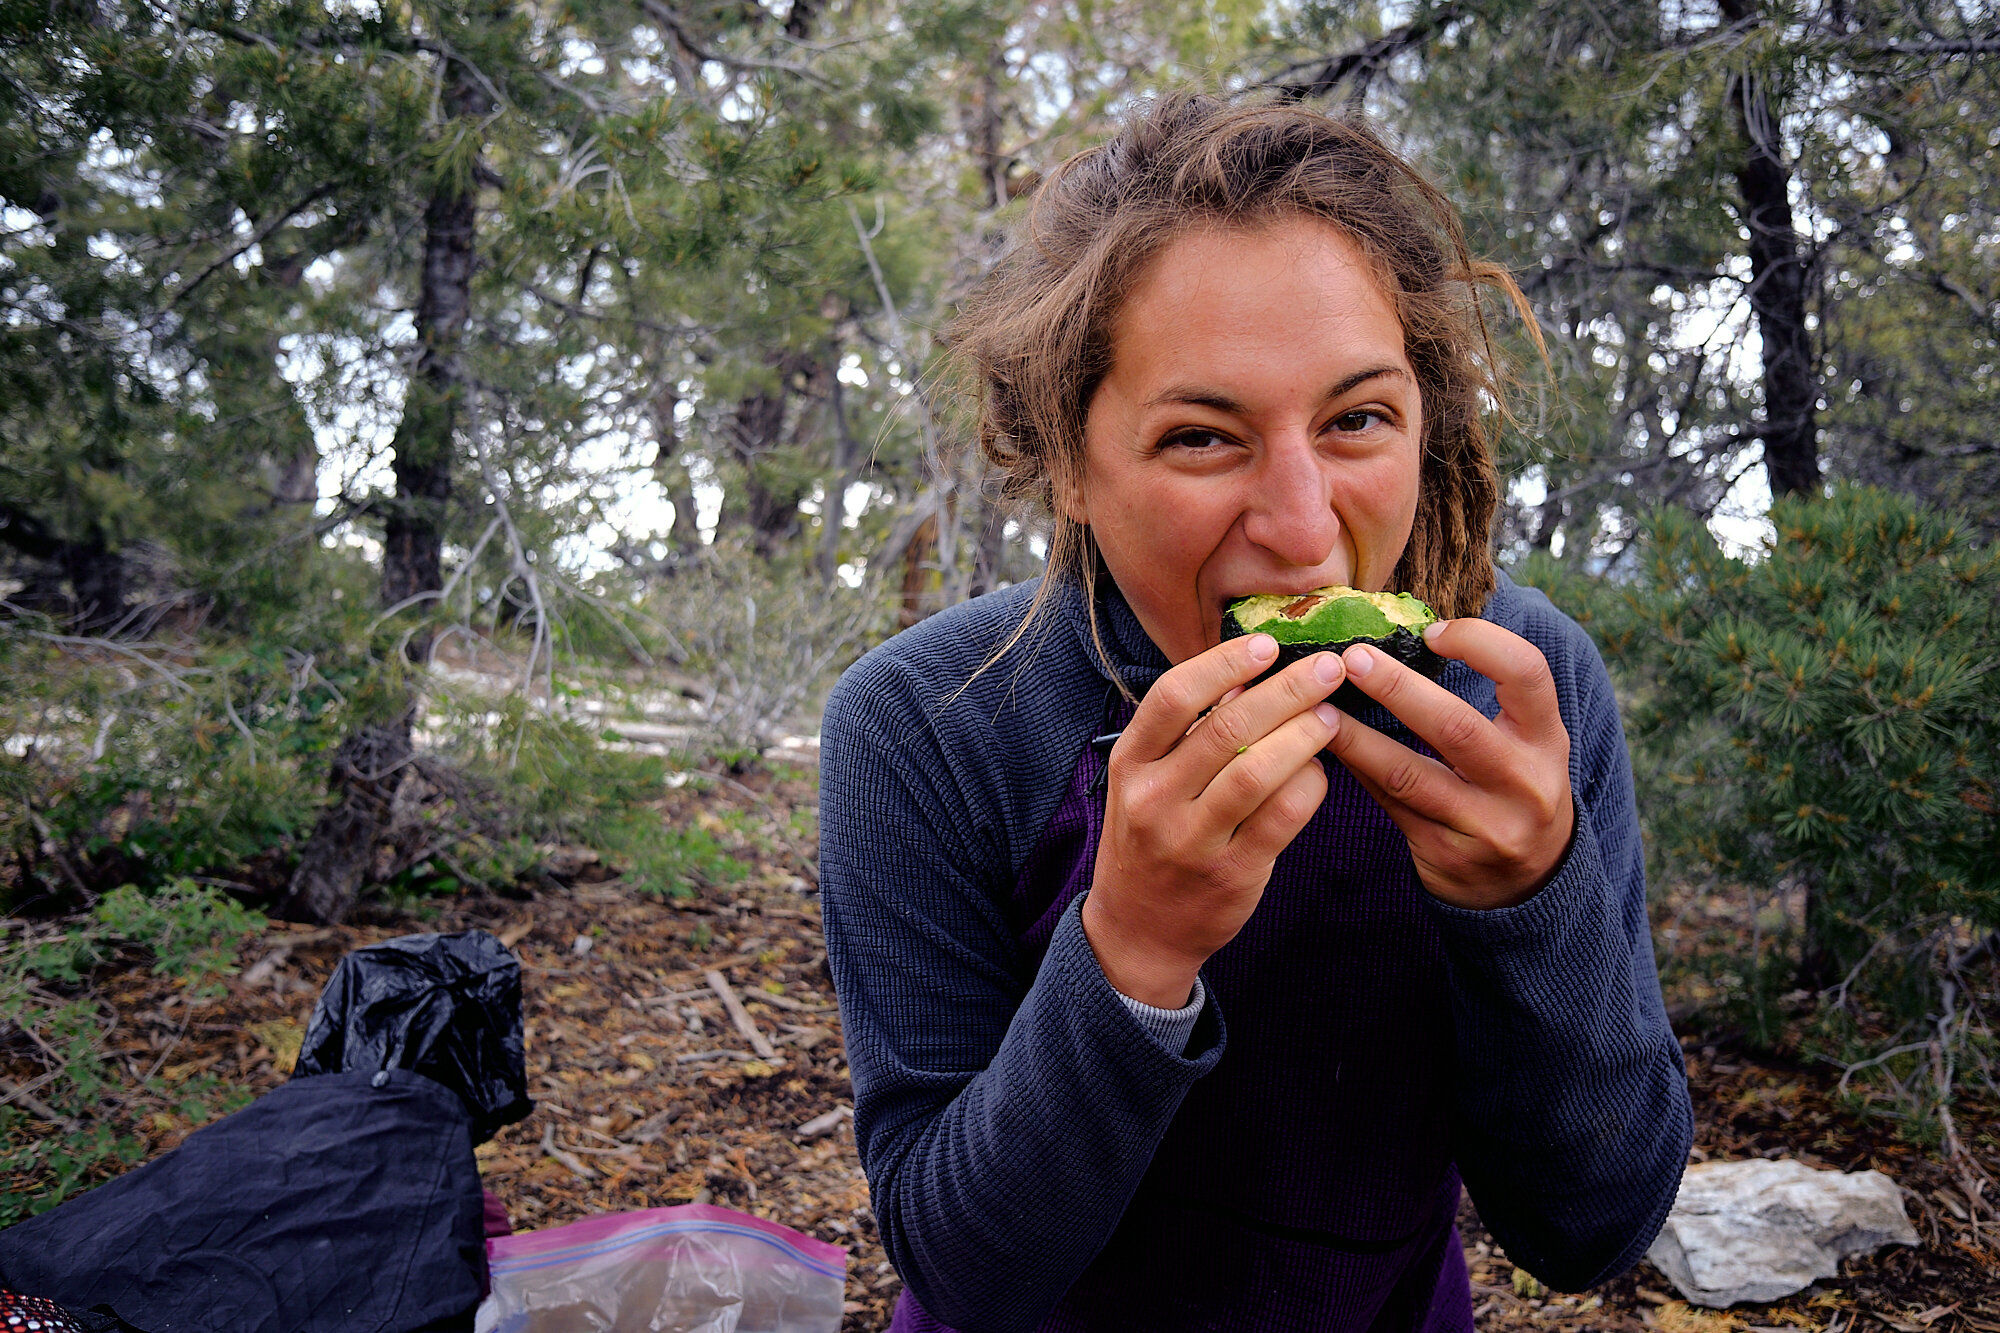  Fiddlehead gnaws on an avocado, a trail luxury. | 5/24/19 Mile 275.6, 7,264' 